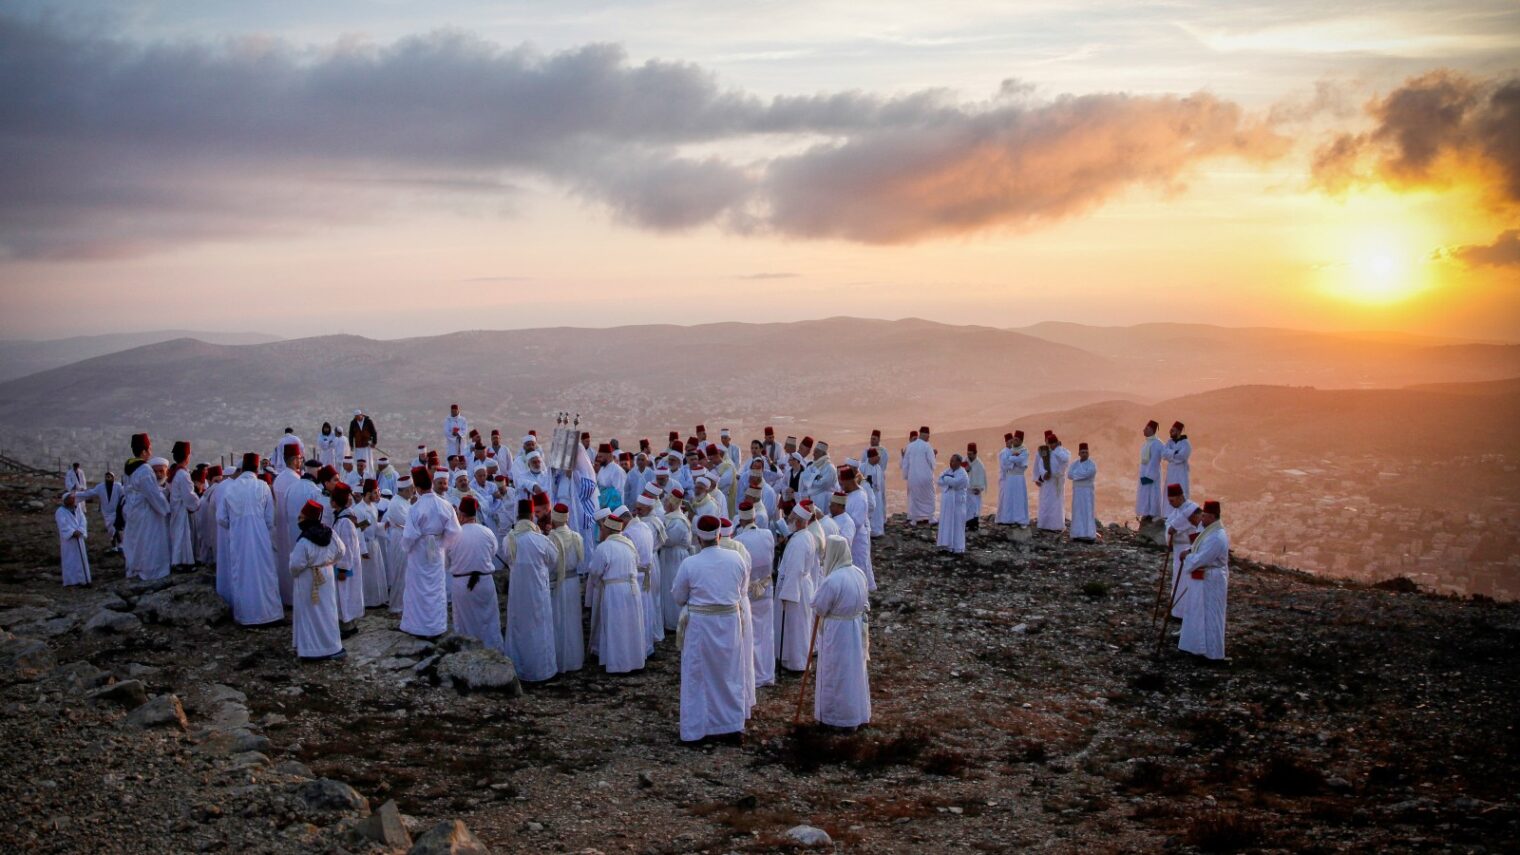 Samaritans pray during a pilgrimage marking the holiday of Sukkot on Mount Gerizim on the outskirts of Nablus, October 20, 2021. Photo by Nasser Ishtayeh/Flash90